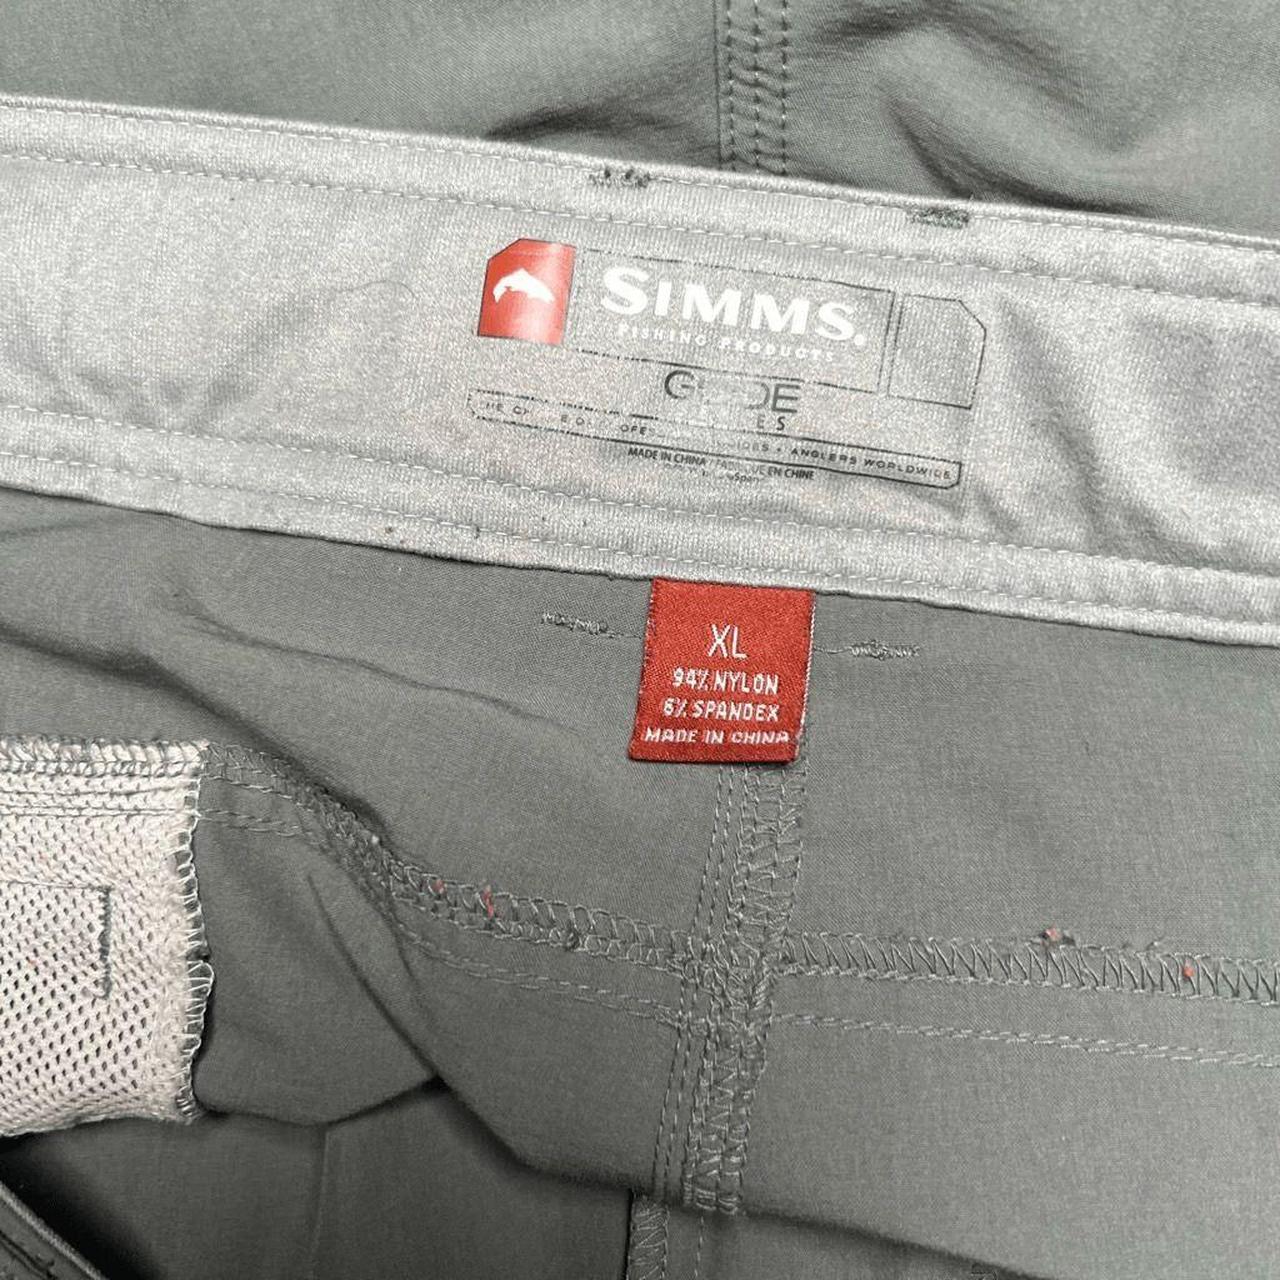 Simms Guide Series Men's XL Gray Fishing Shorts - Depop